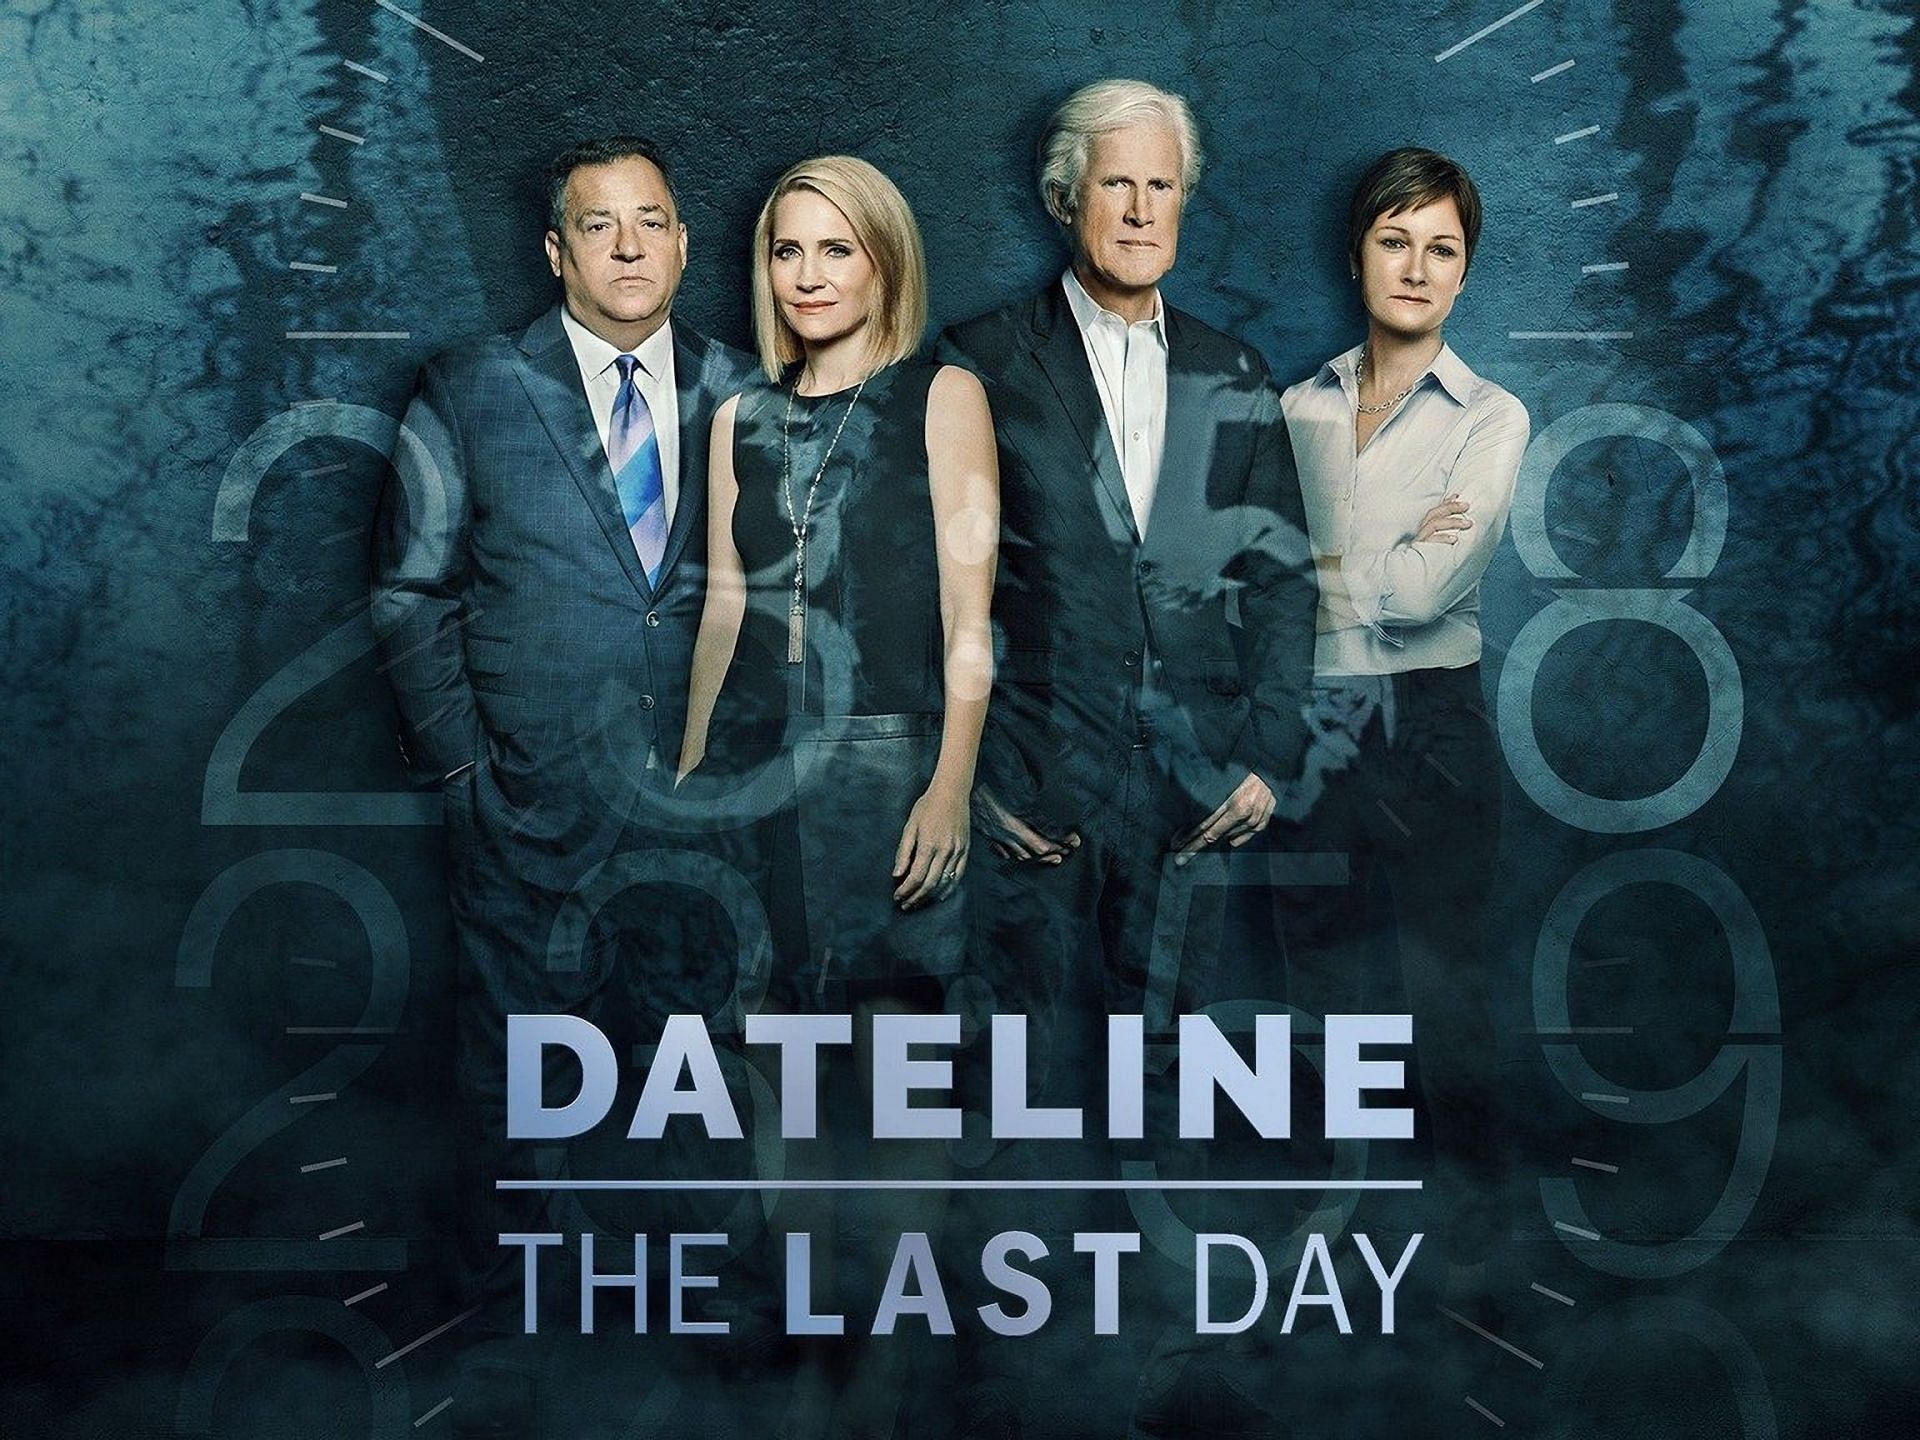 Dateline: The Last Day (Image via Rotten Tomatoes)